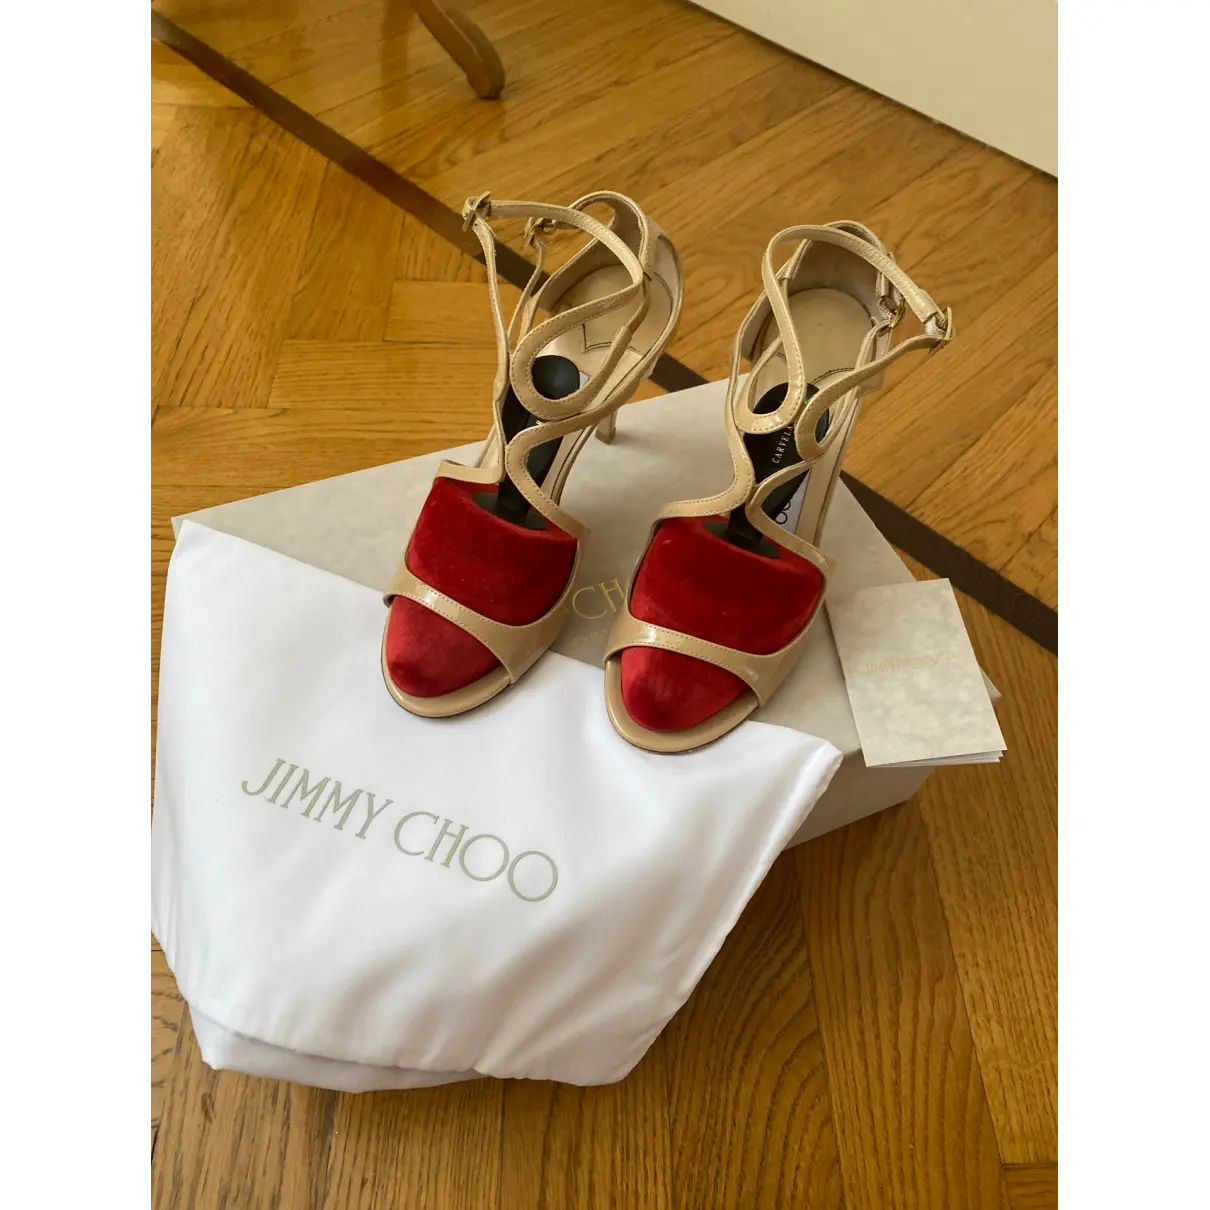 Buy Jimmy Choo Patent leather sandal online